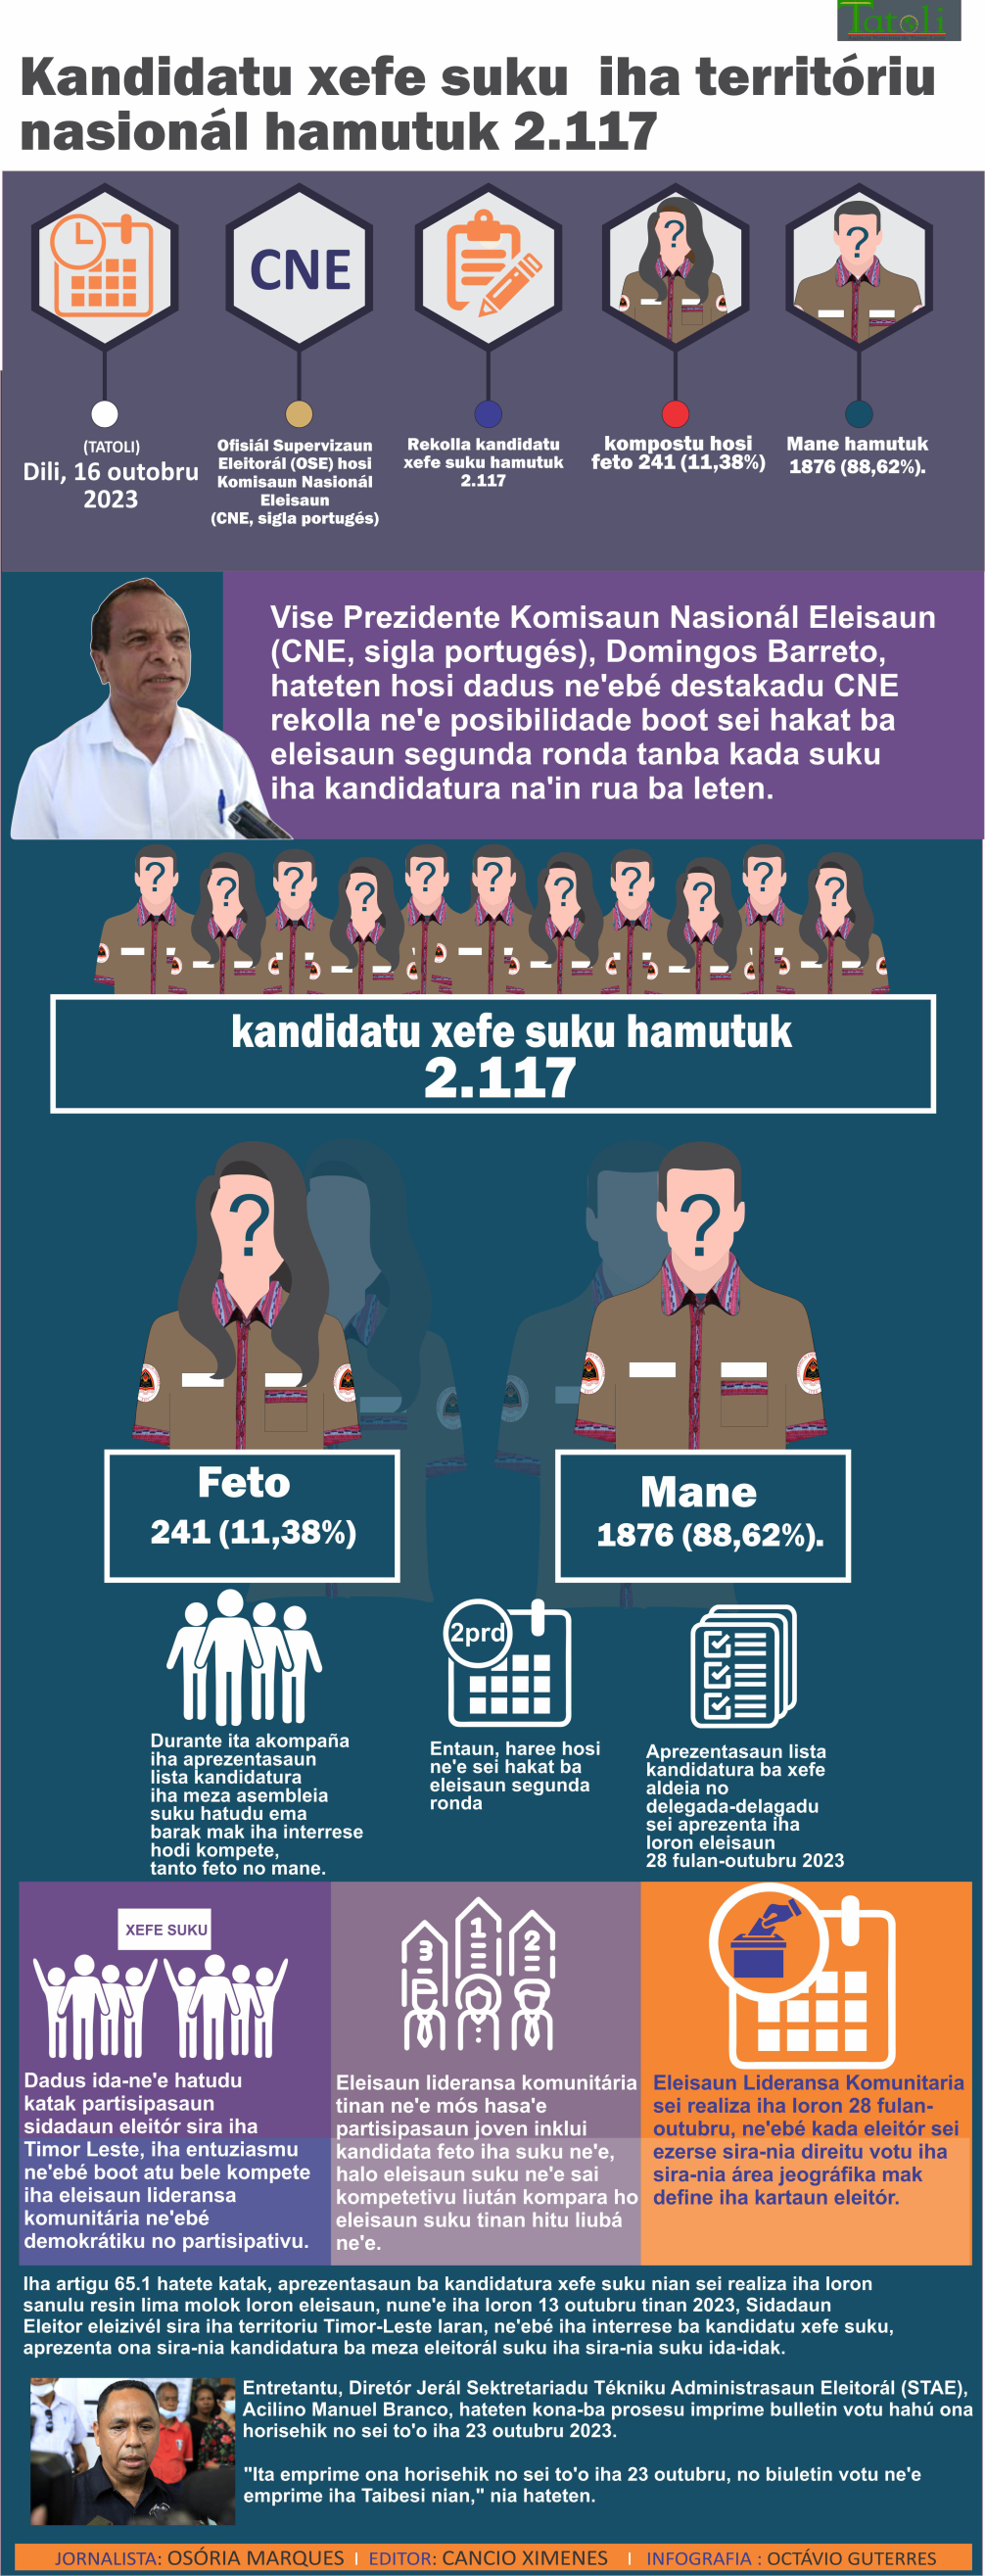 Infografia: Kandidatu xefe suku iha territóriu nasionál hamutuk 2.117